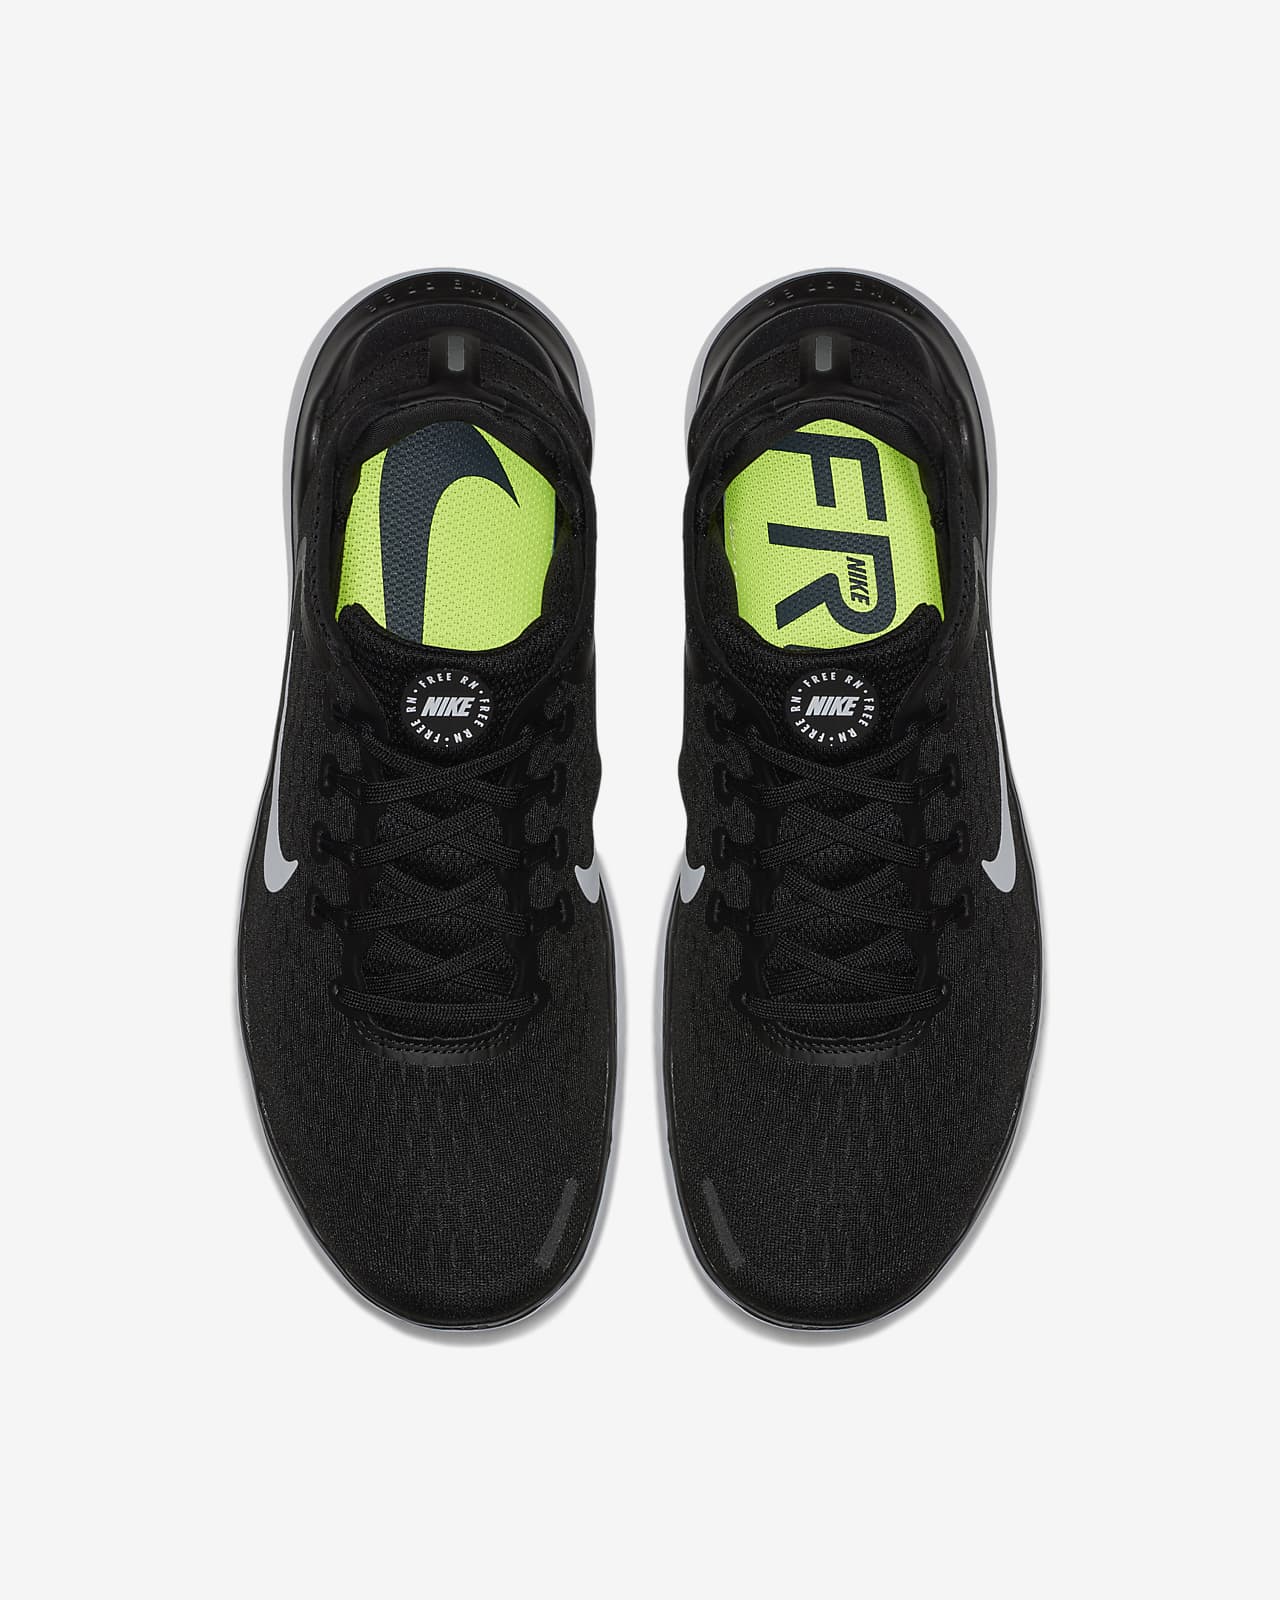 Nike Free Run 2018 Men's Road Running Shoes